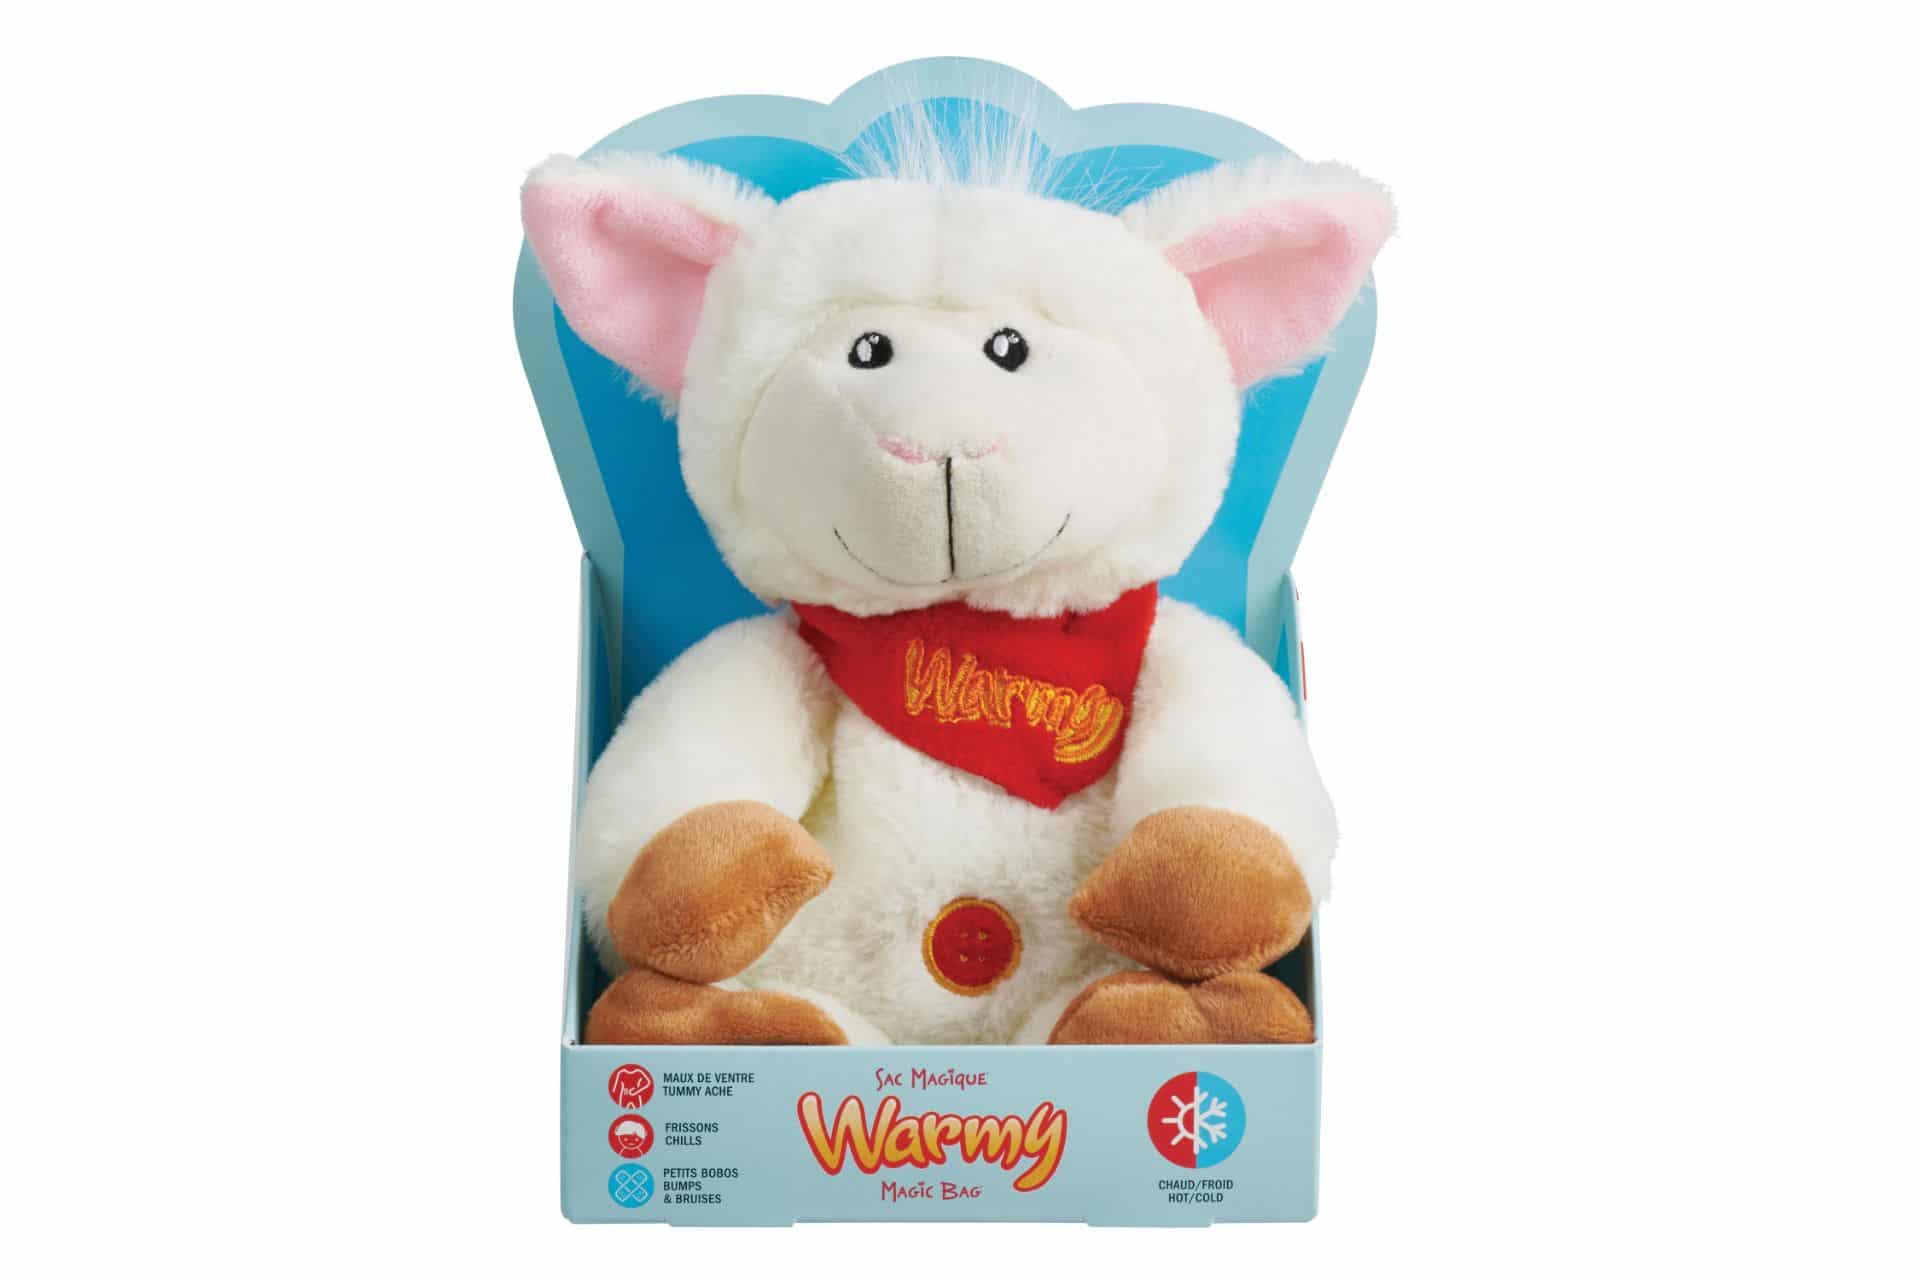 white lamb stuffed toy in blue retail box